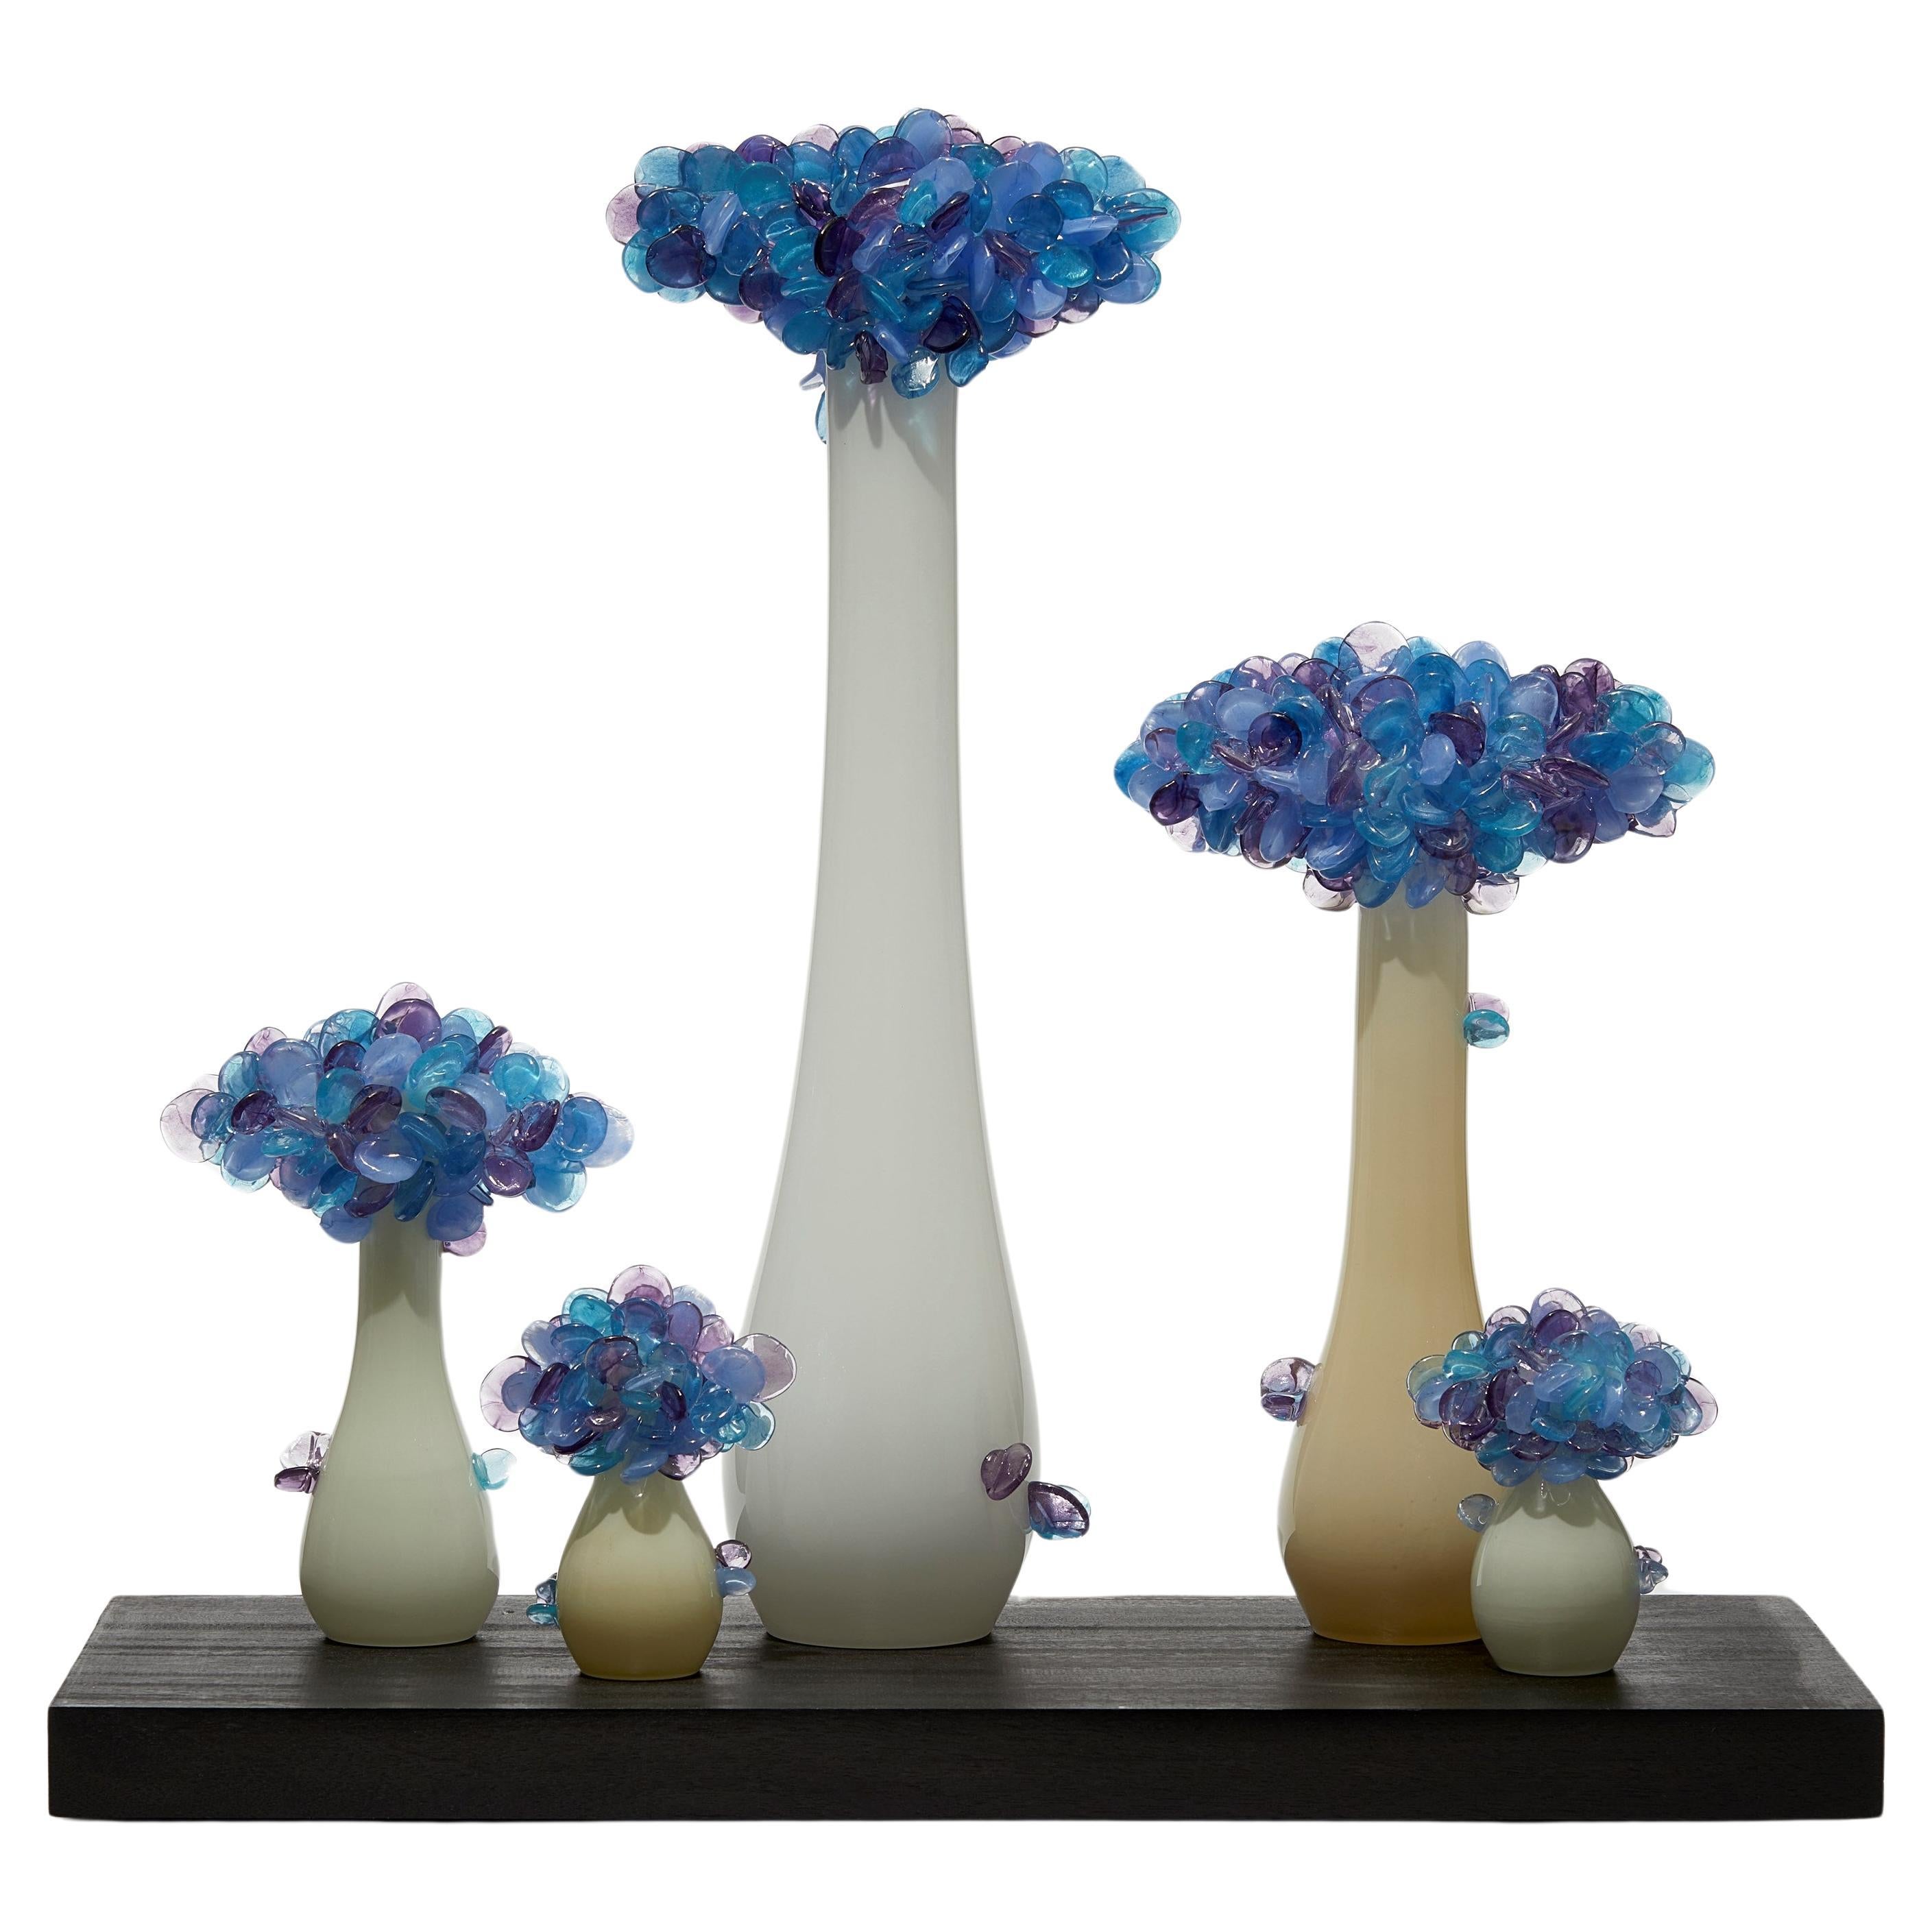 Enchanted Mori Dawn, a tree & bonsai inspired glass artwork by Louis Thompson